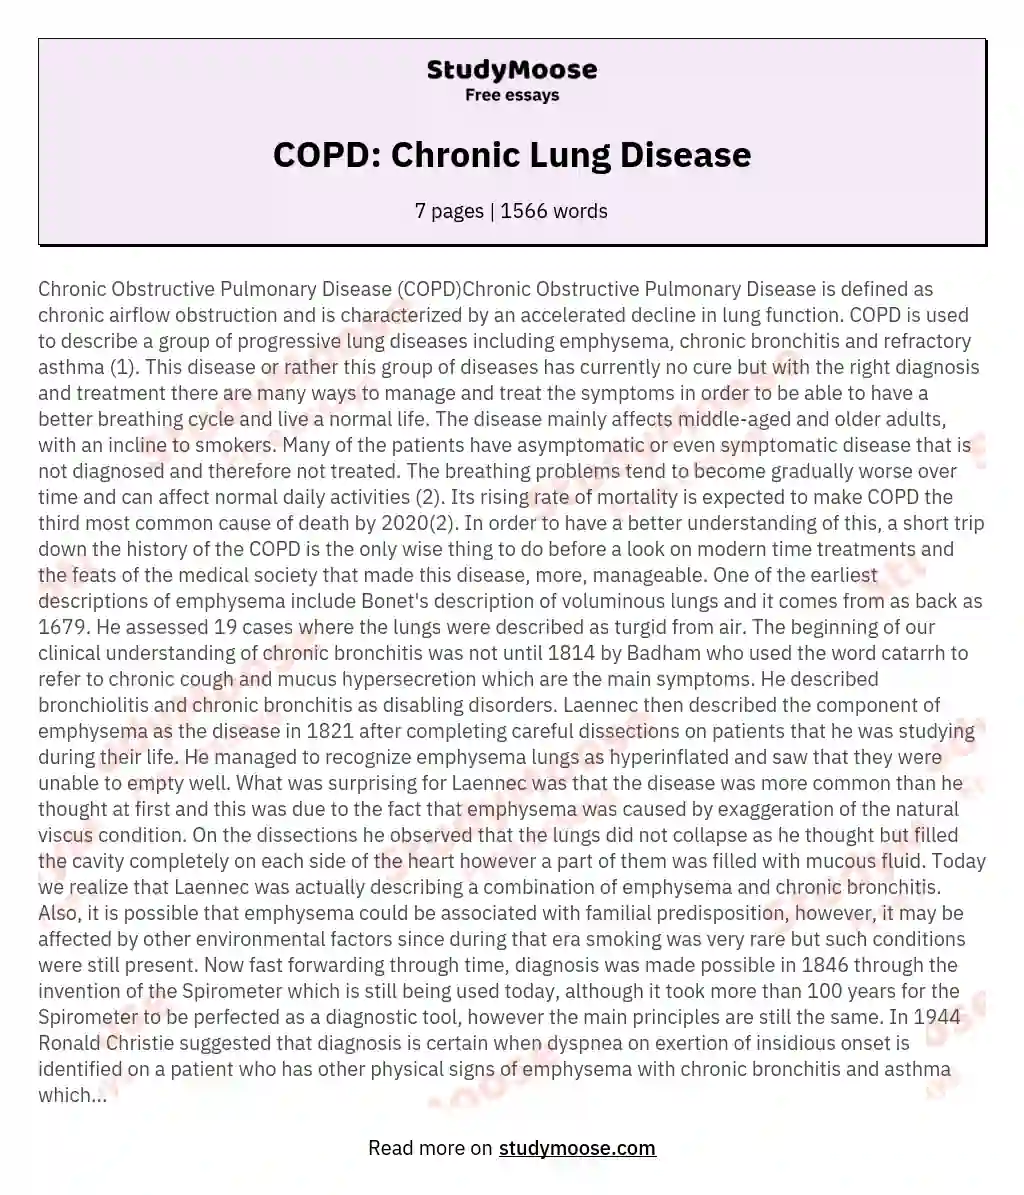 Chronic Obstructive Pulmonary Disease COPDChronic Obstructive Pulmonary Disease is defined as chronic